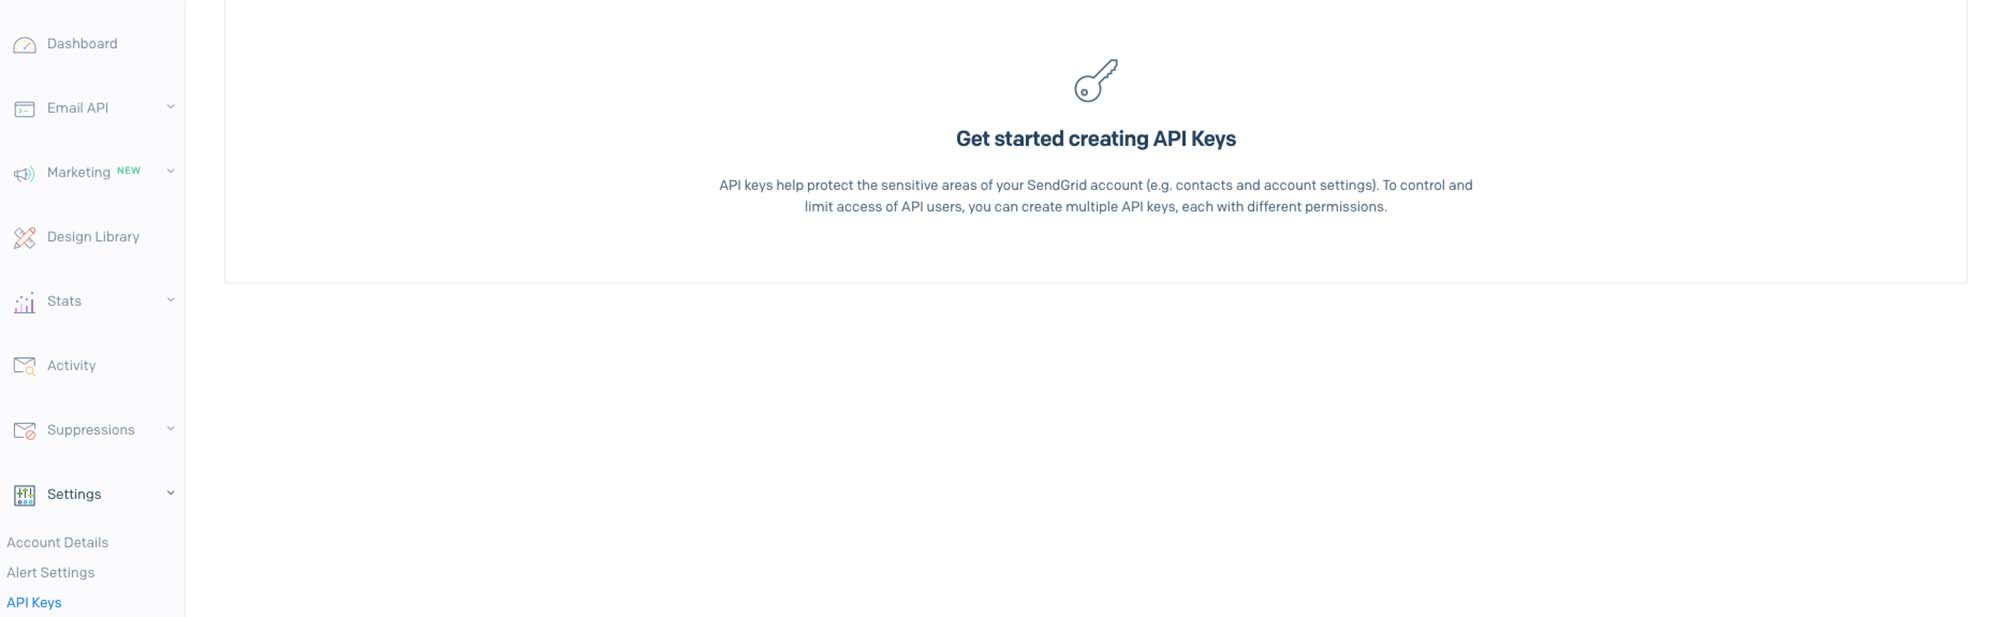 Creating API keys in Sendgrid